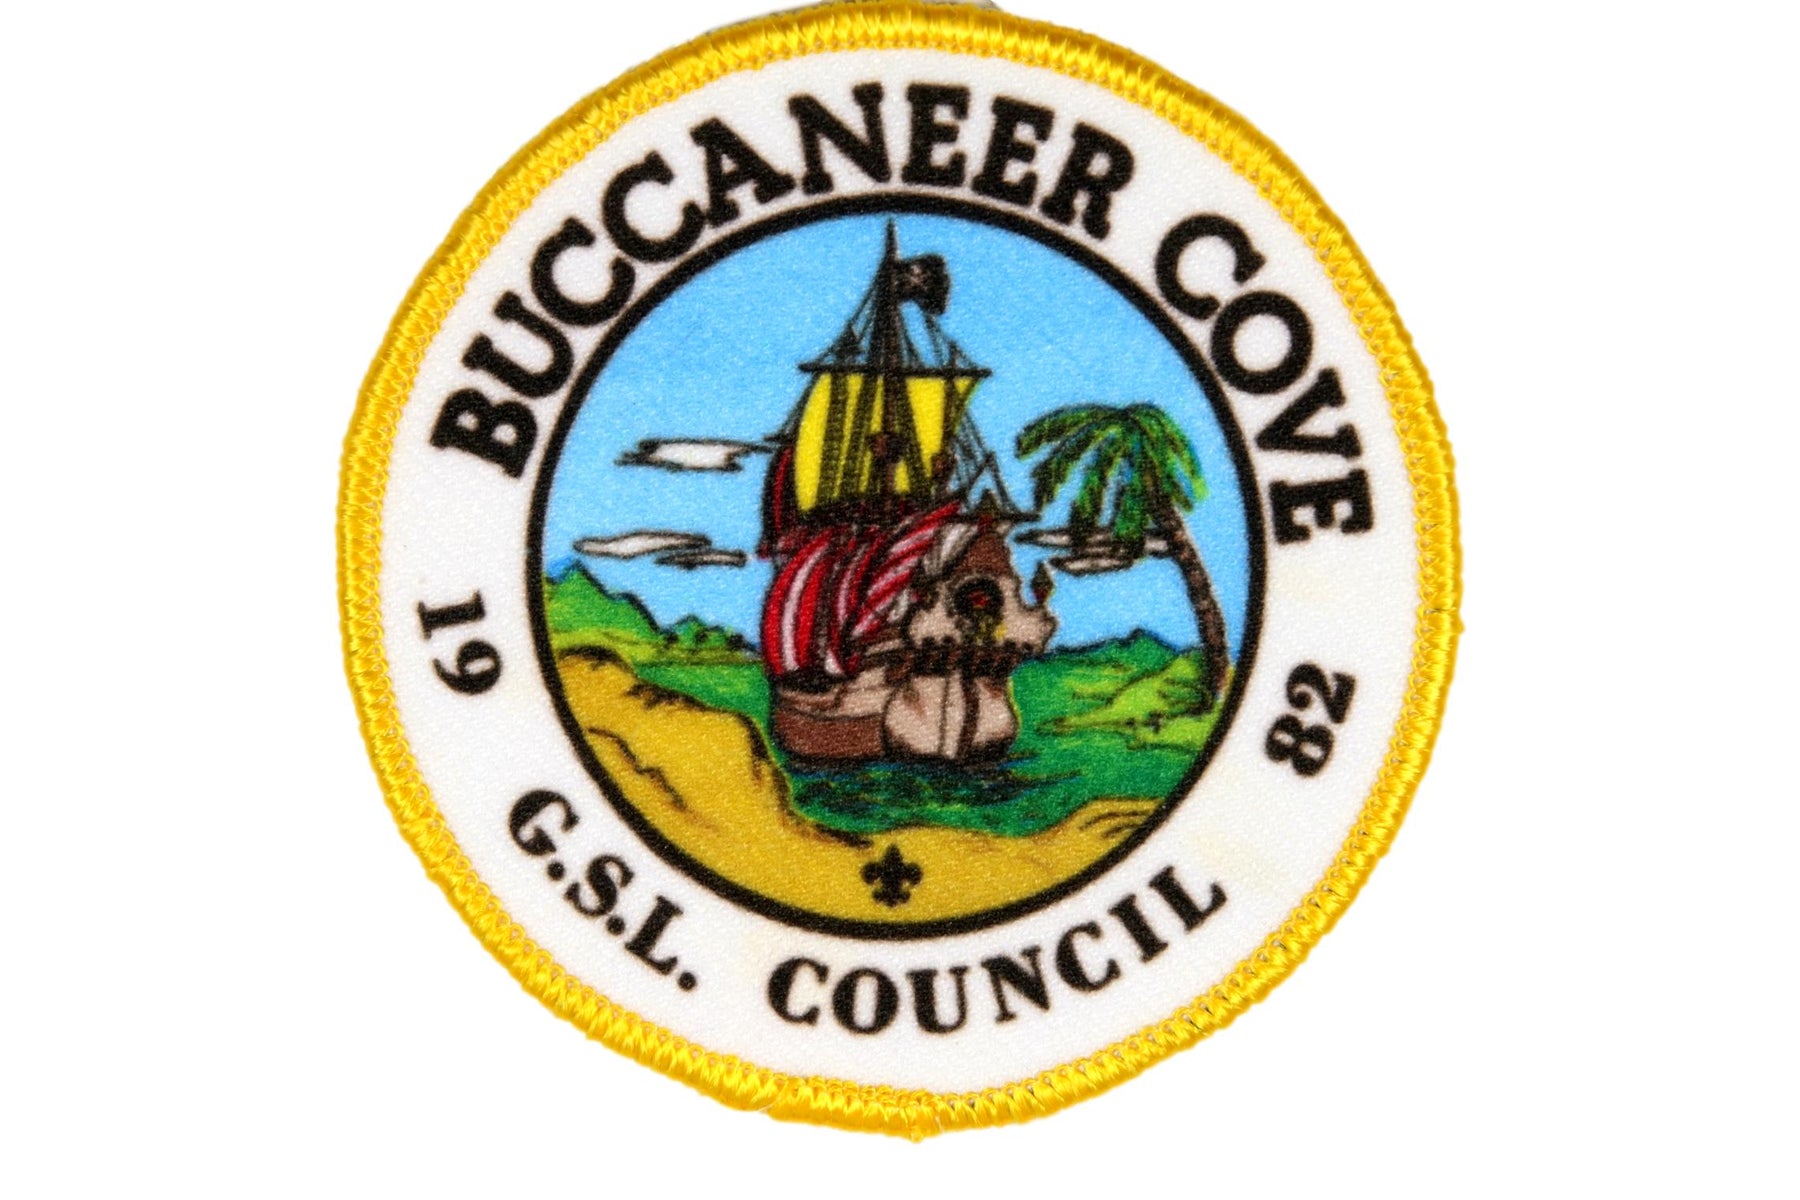 Buccaneer Cove Patch 1982